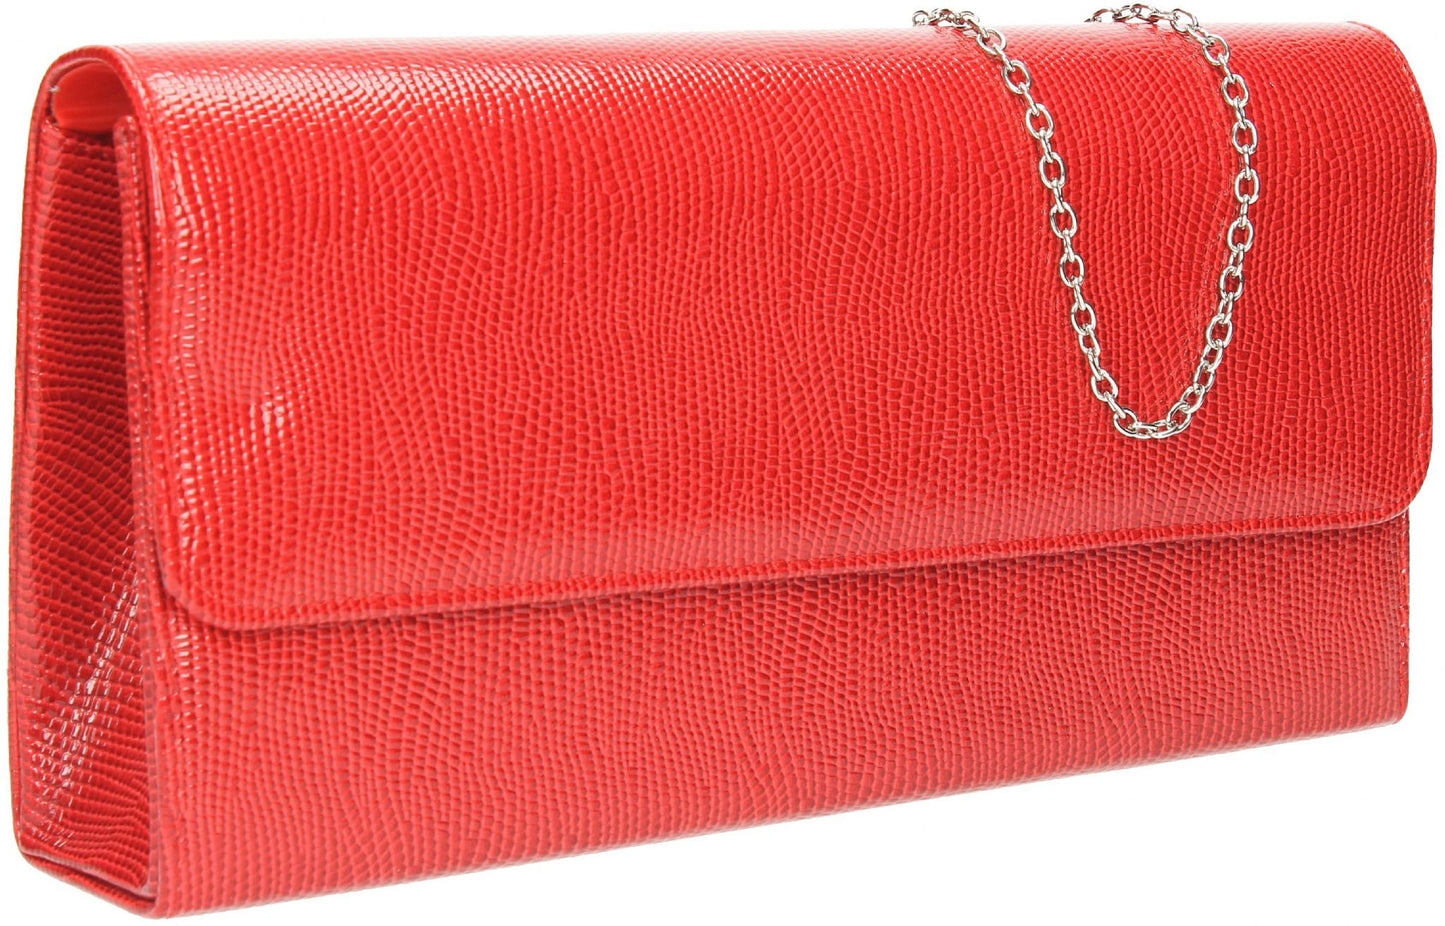 SWANKYSWANS Soho Clutch Bag Red Cute Cheap Clutch Bag For Weddings School and Work